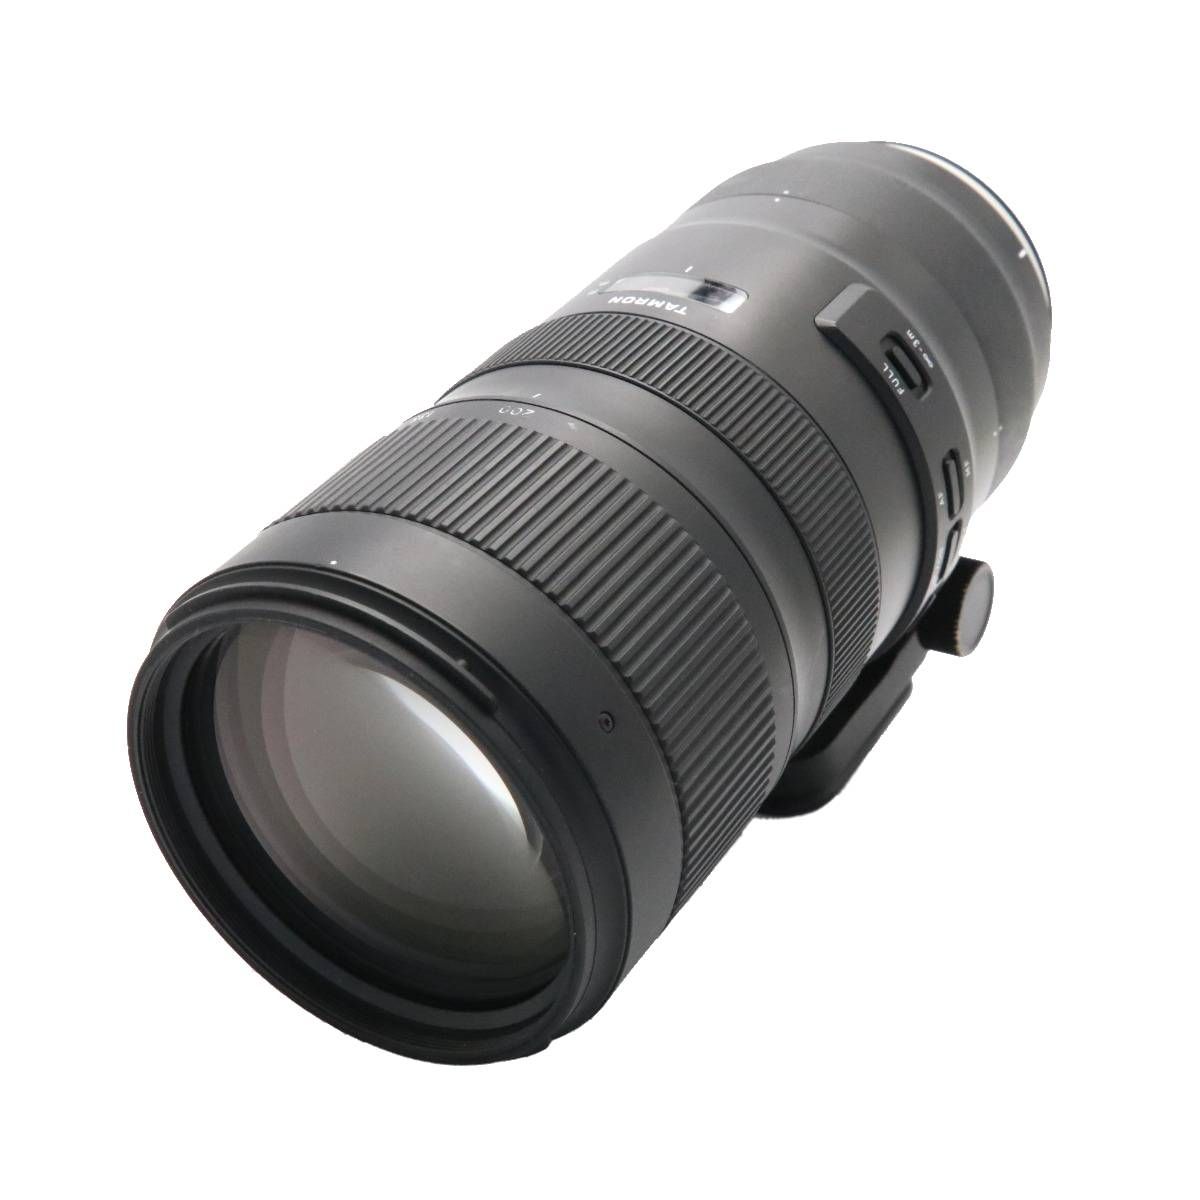 Tamron SP 70-200mm f2.8 Di VC USD G2 - Canon Fit Lens